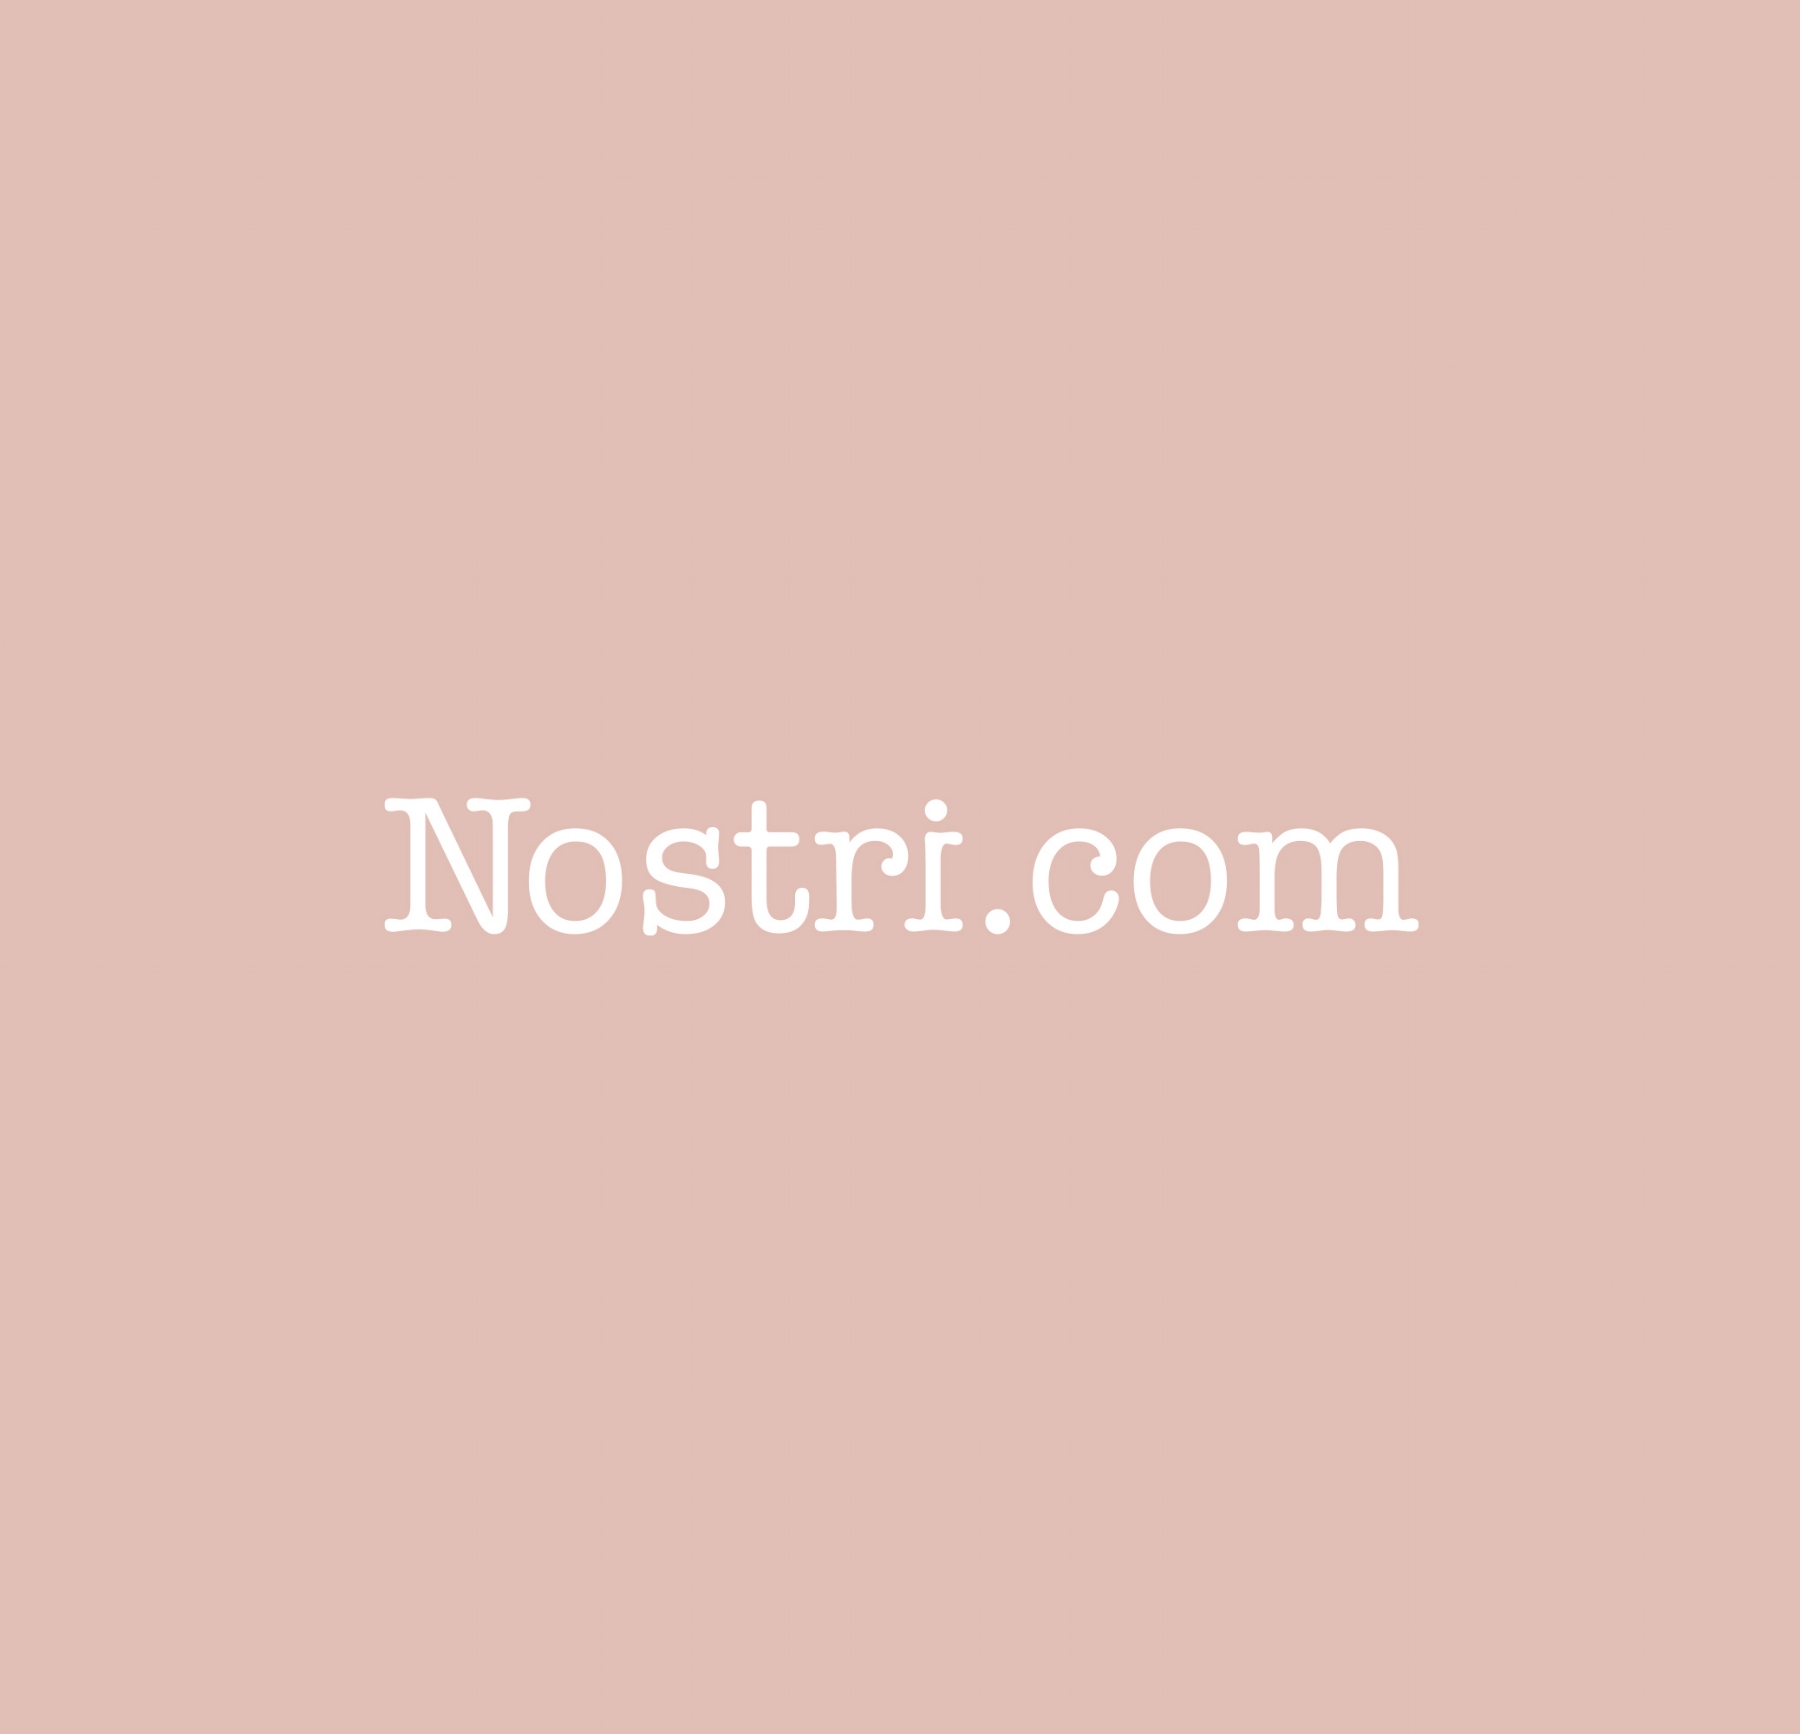 Nostri_logo3.jpg